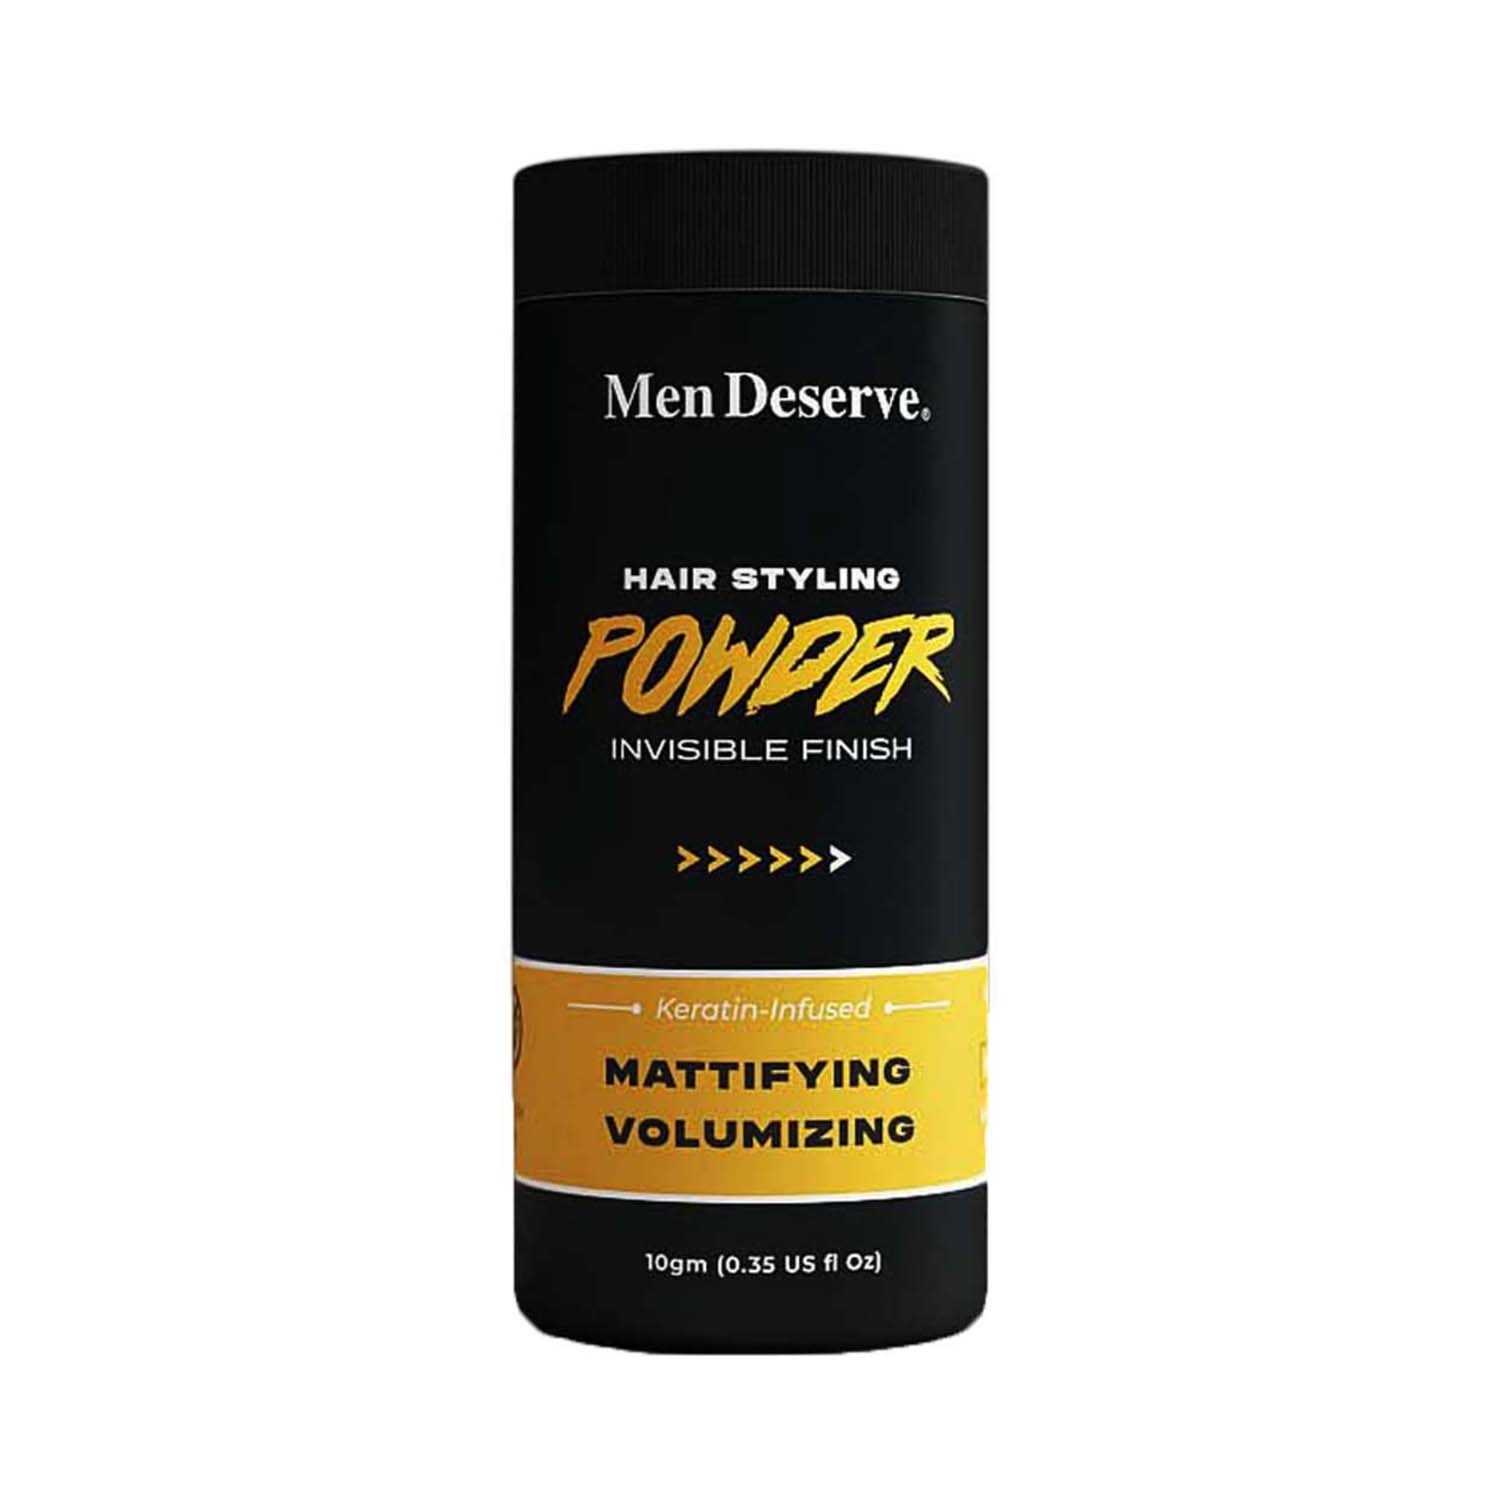 Men Deserve | Men Deserve Hair Volumizing Powder Wax For High Volume and Strong Hold (10g)